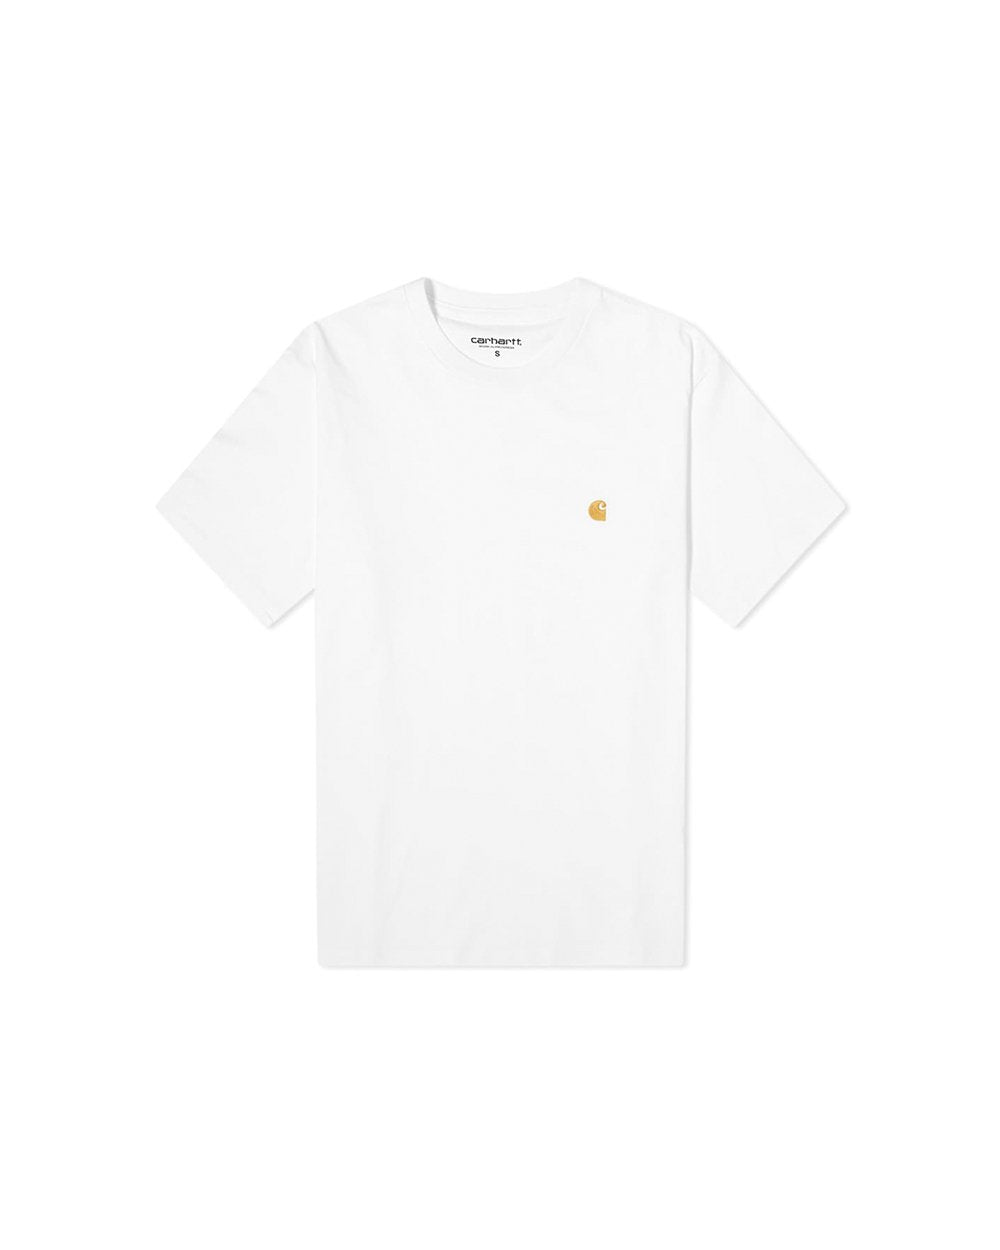 Chase T-Shirt - White / Gold